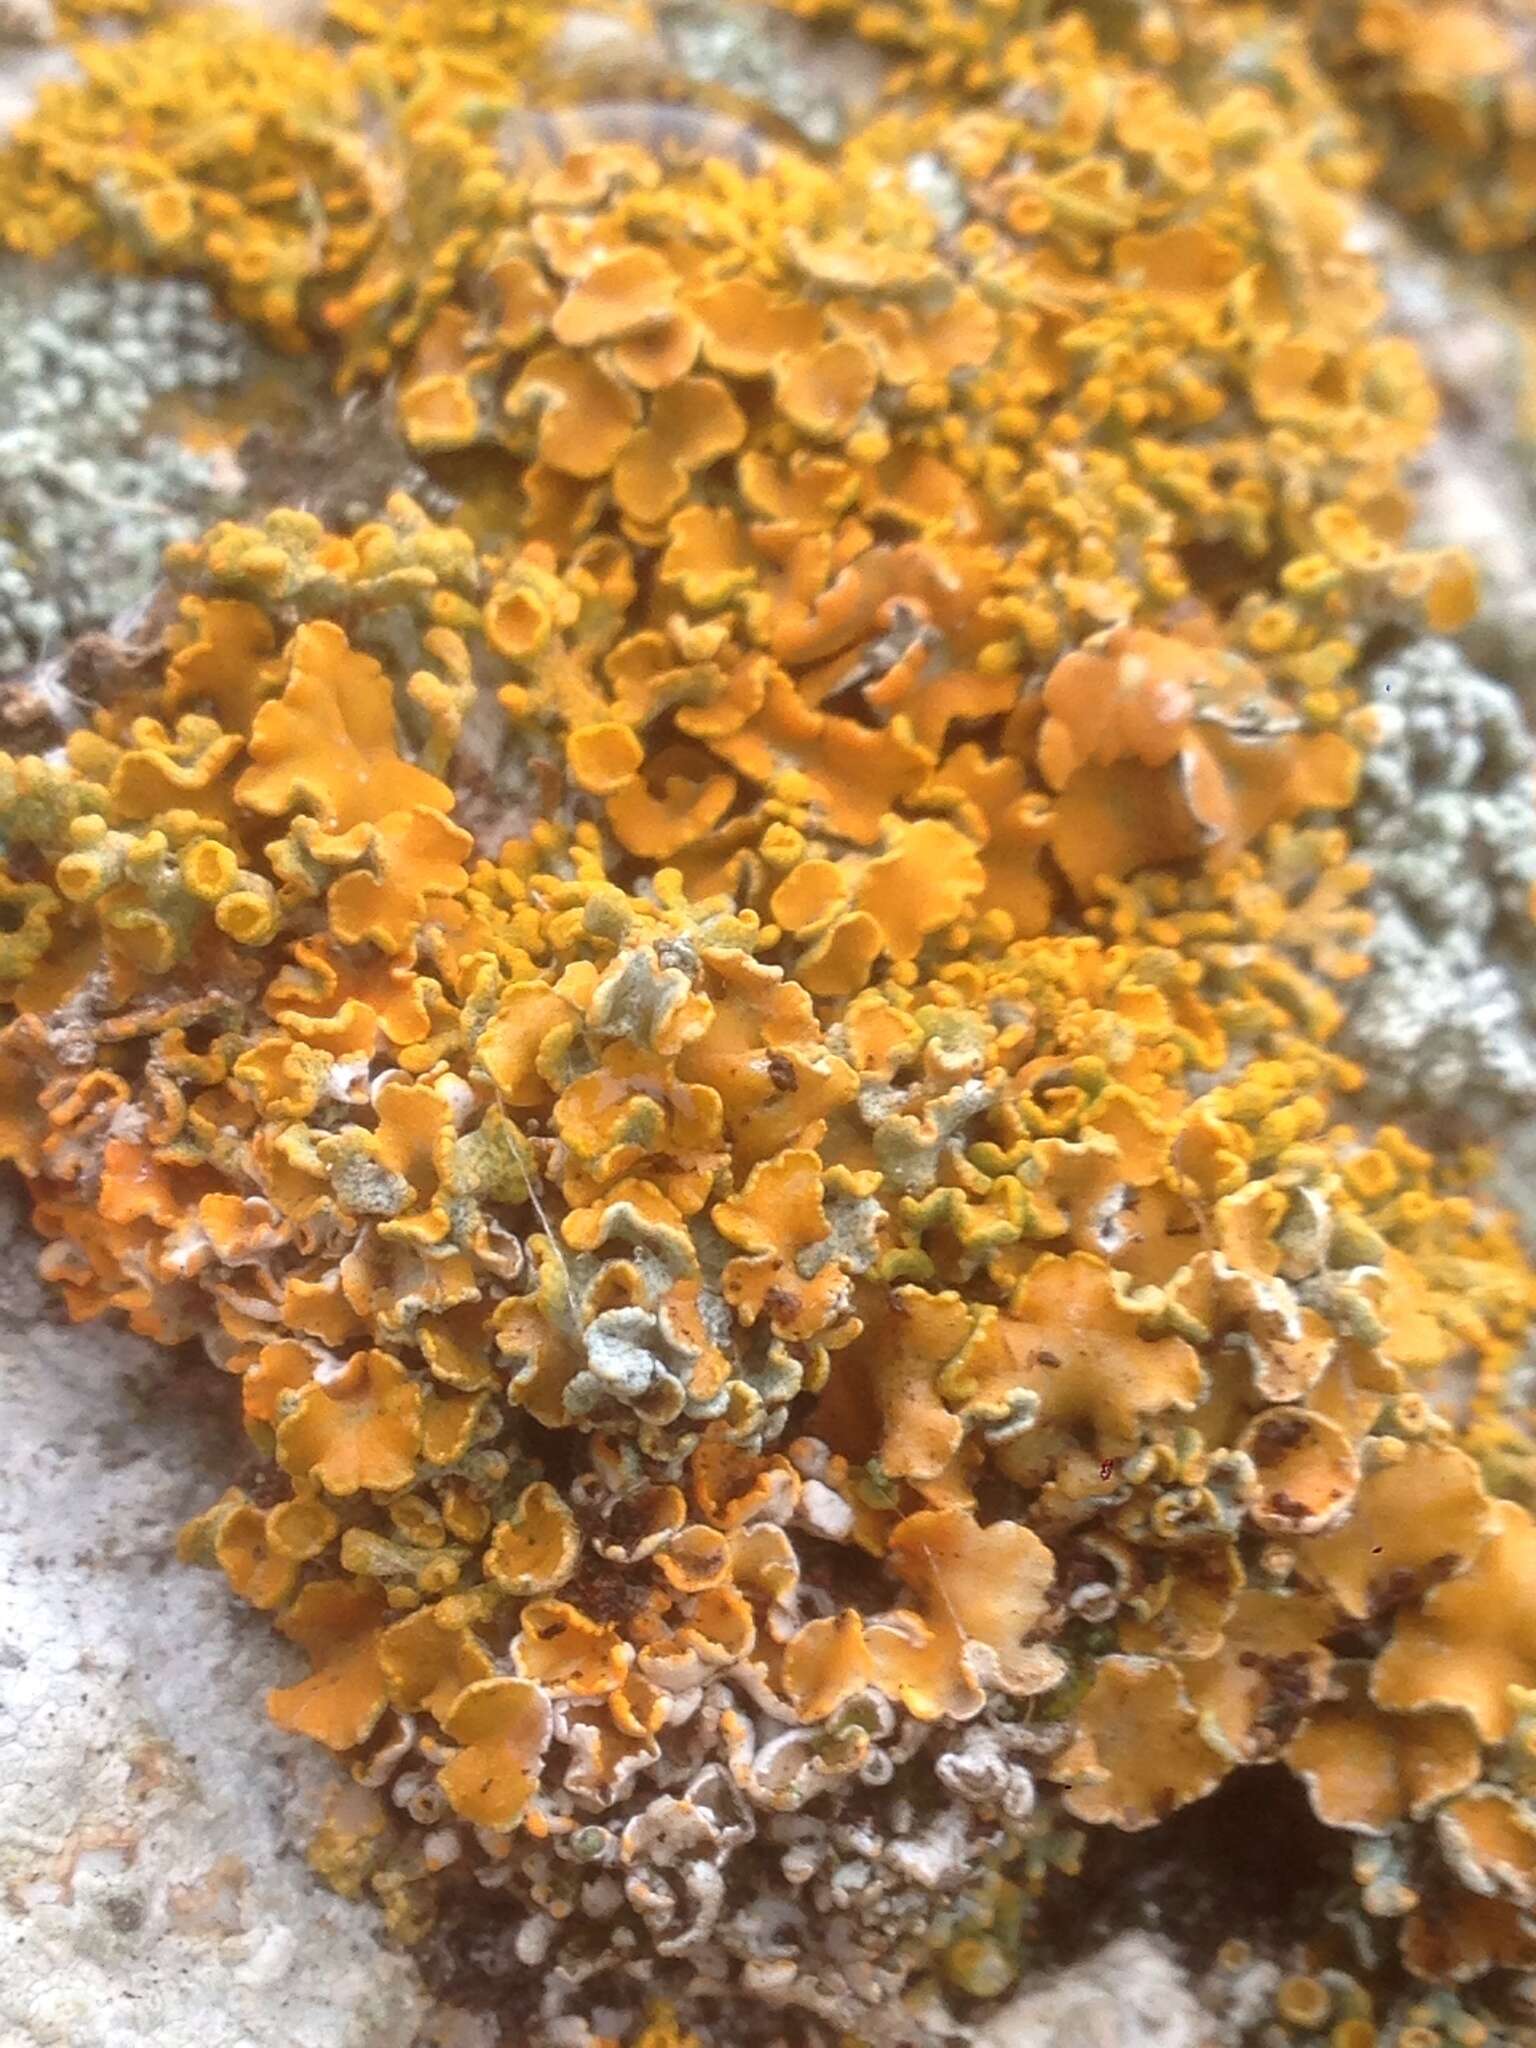 Image of edrudia lichen